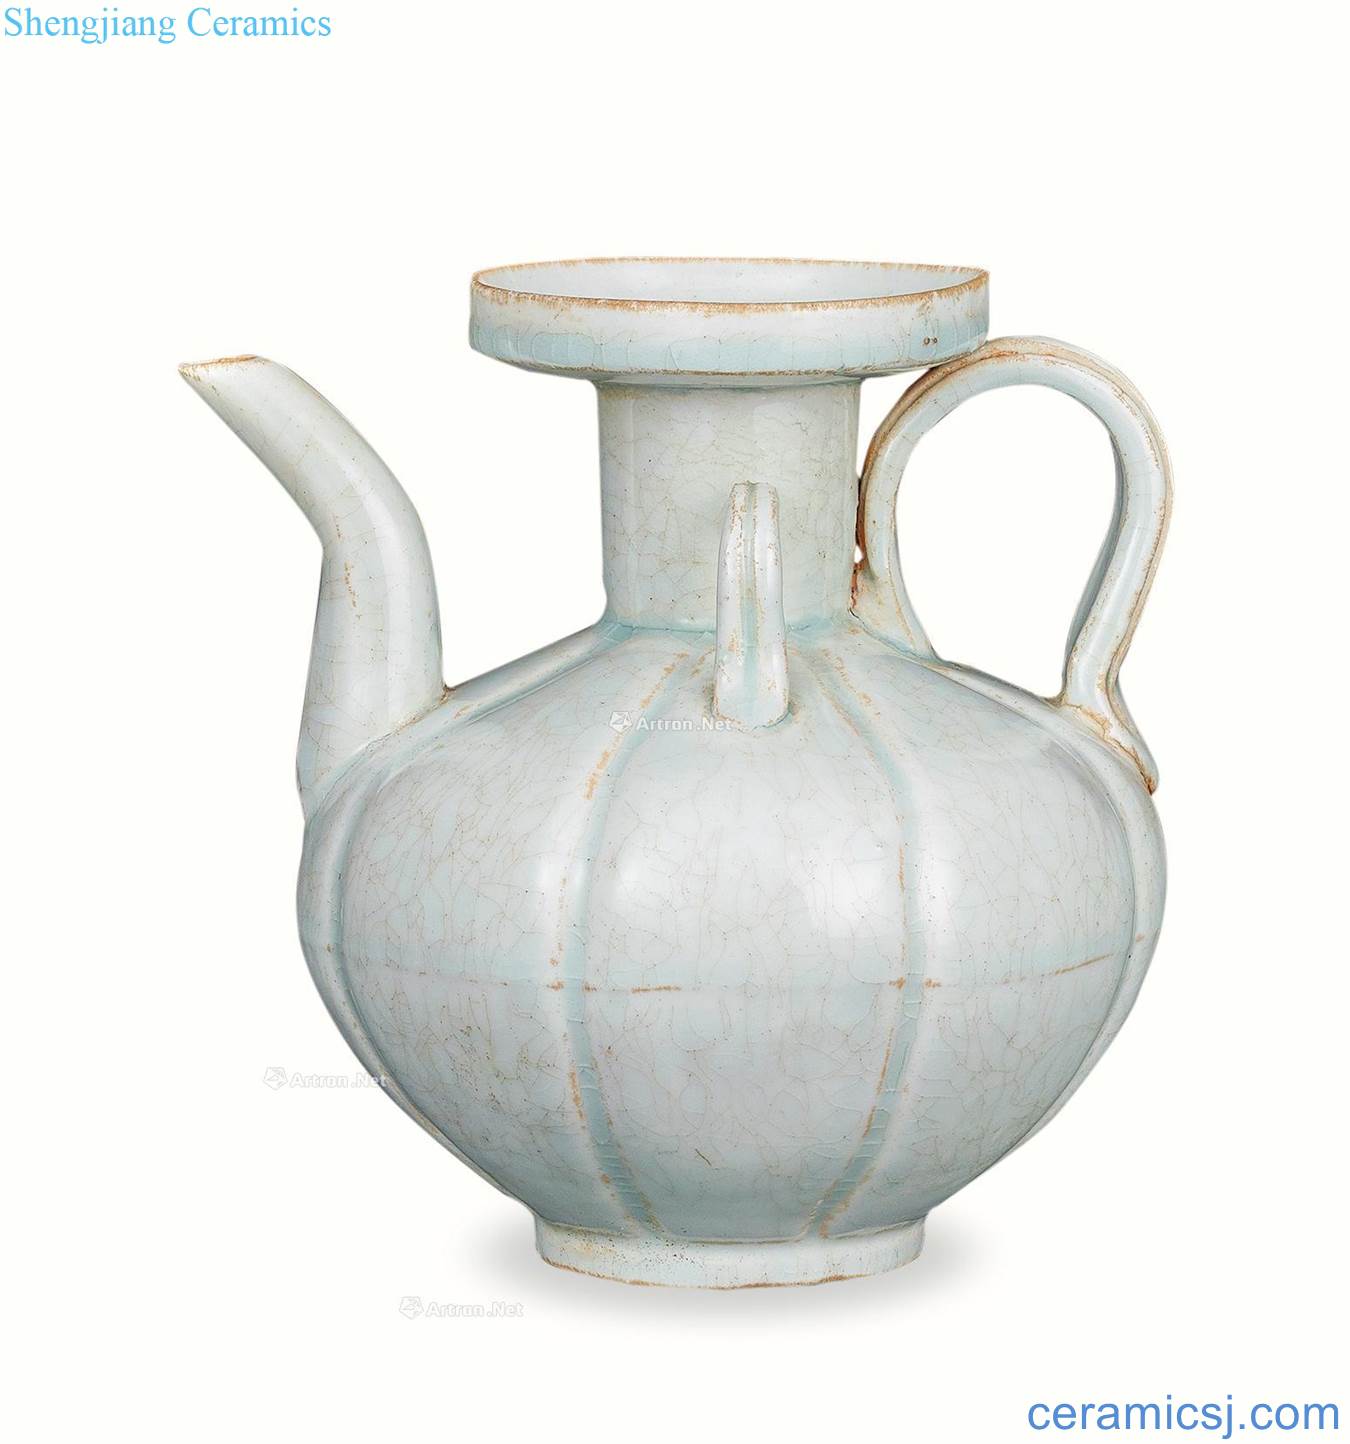 Yuan dynasty celadon hip flask